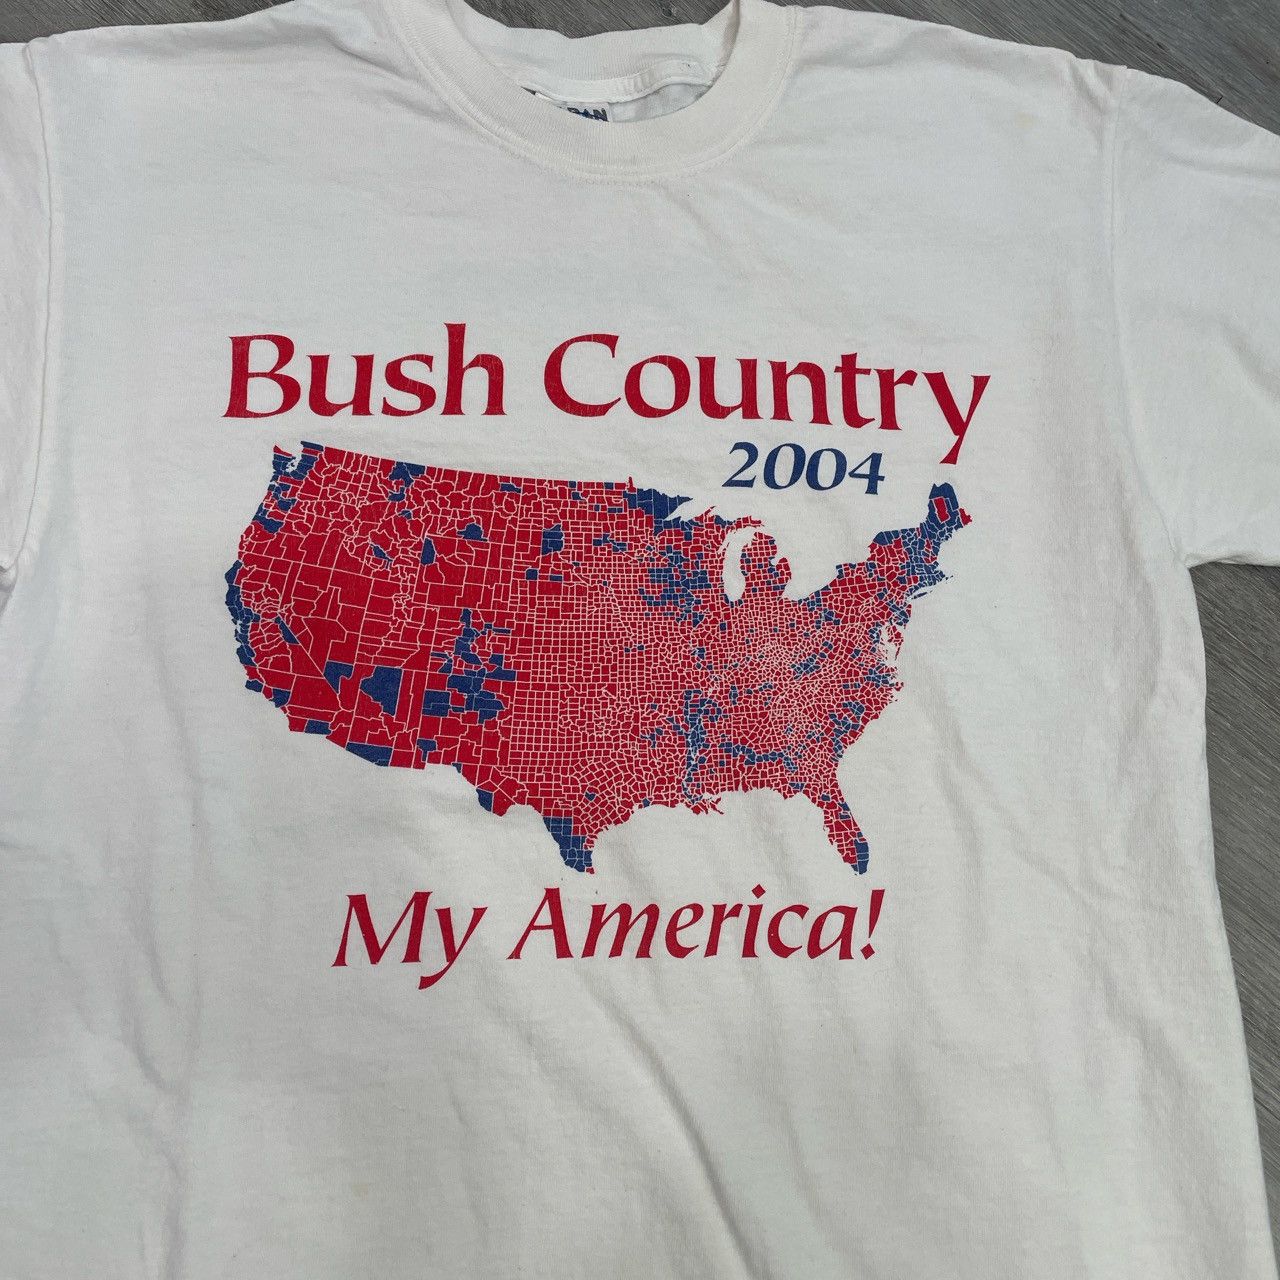 America 2004 Bush Country My America Politics Shirt Size US M / EU 48-50 / 2 - 4 Thumbnail